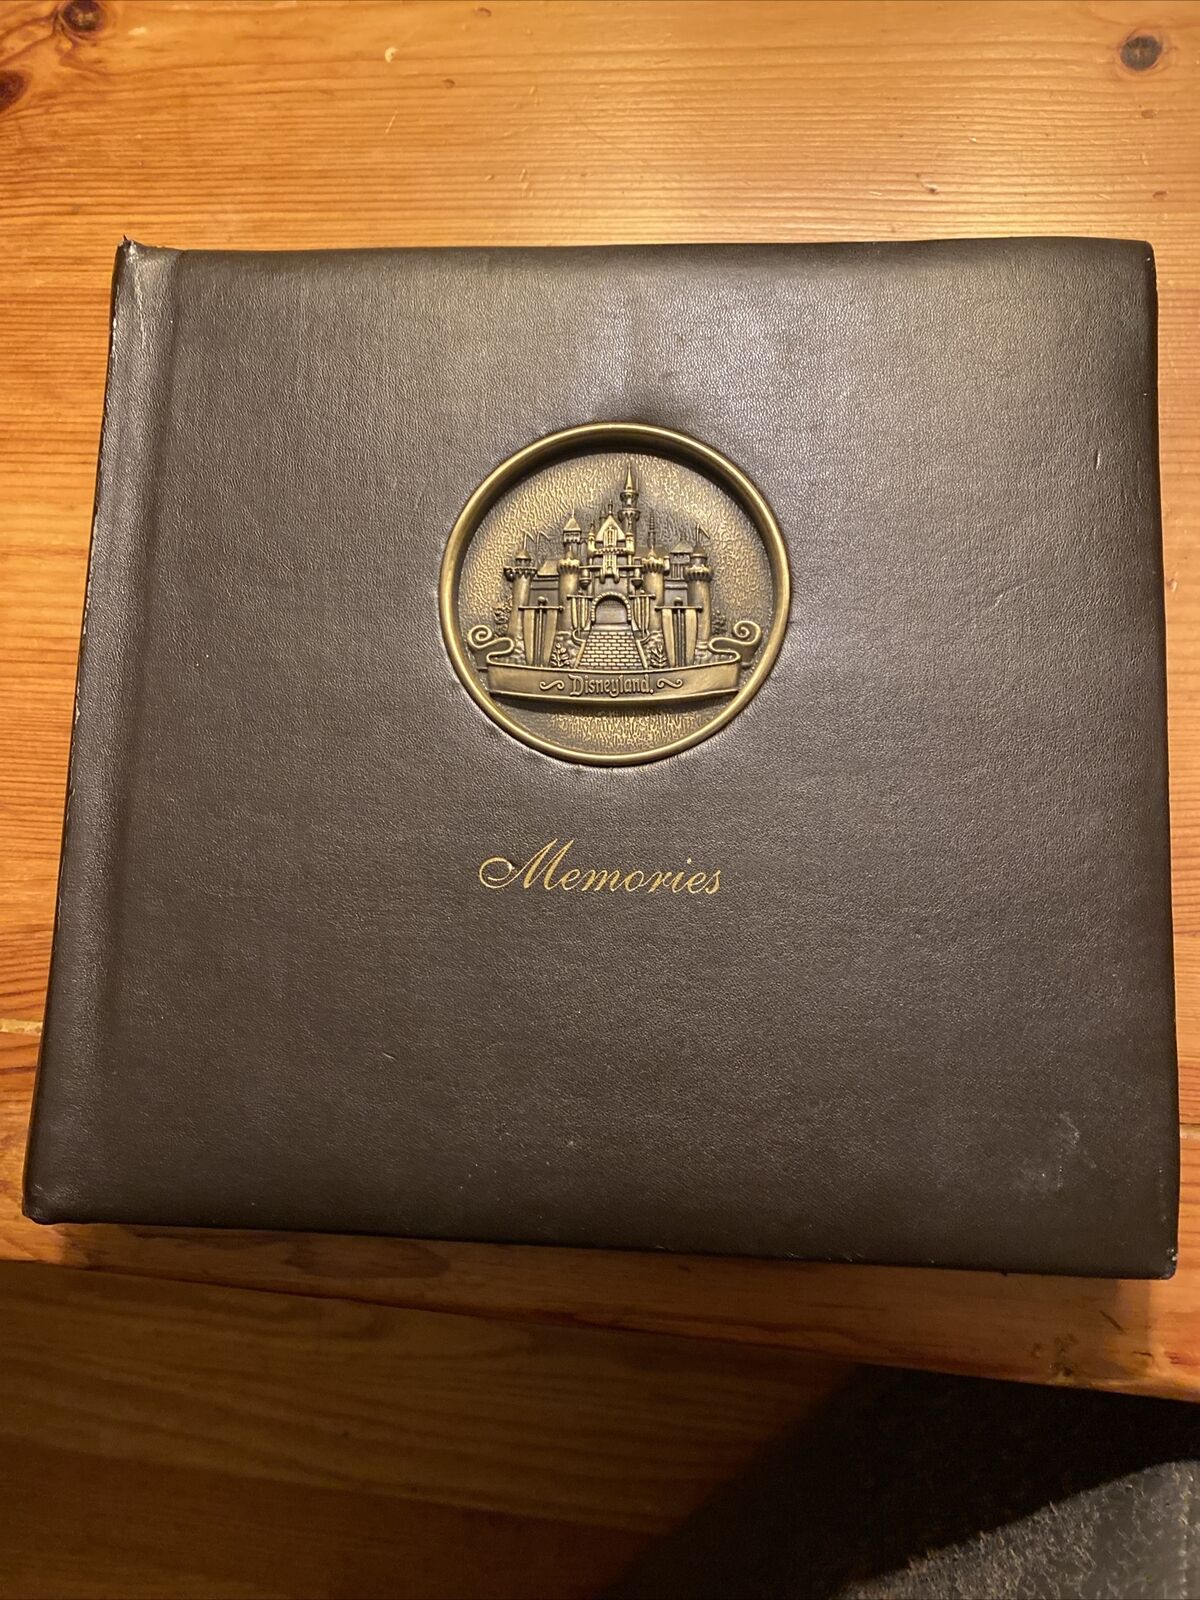 Disneyland Resort Castle Medallion Memories album sealed - NEW